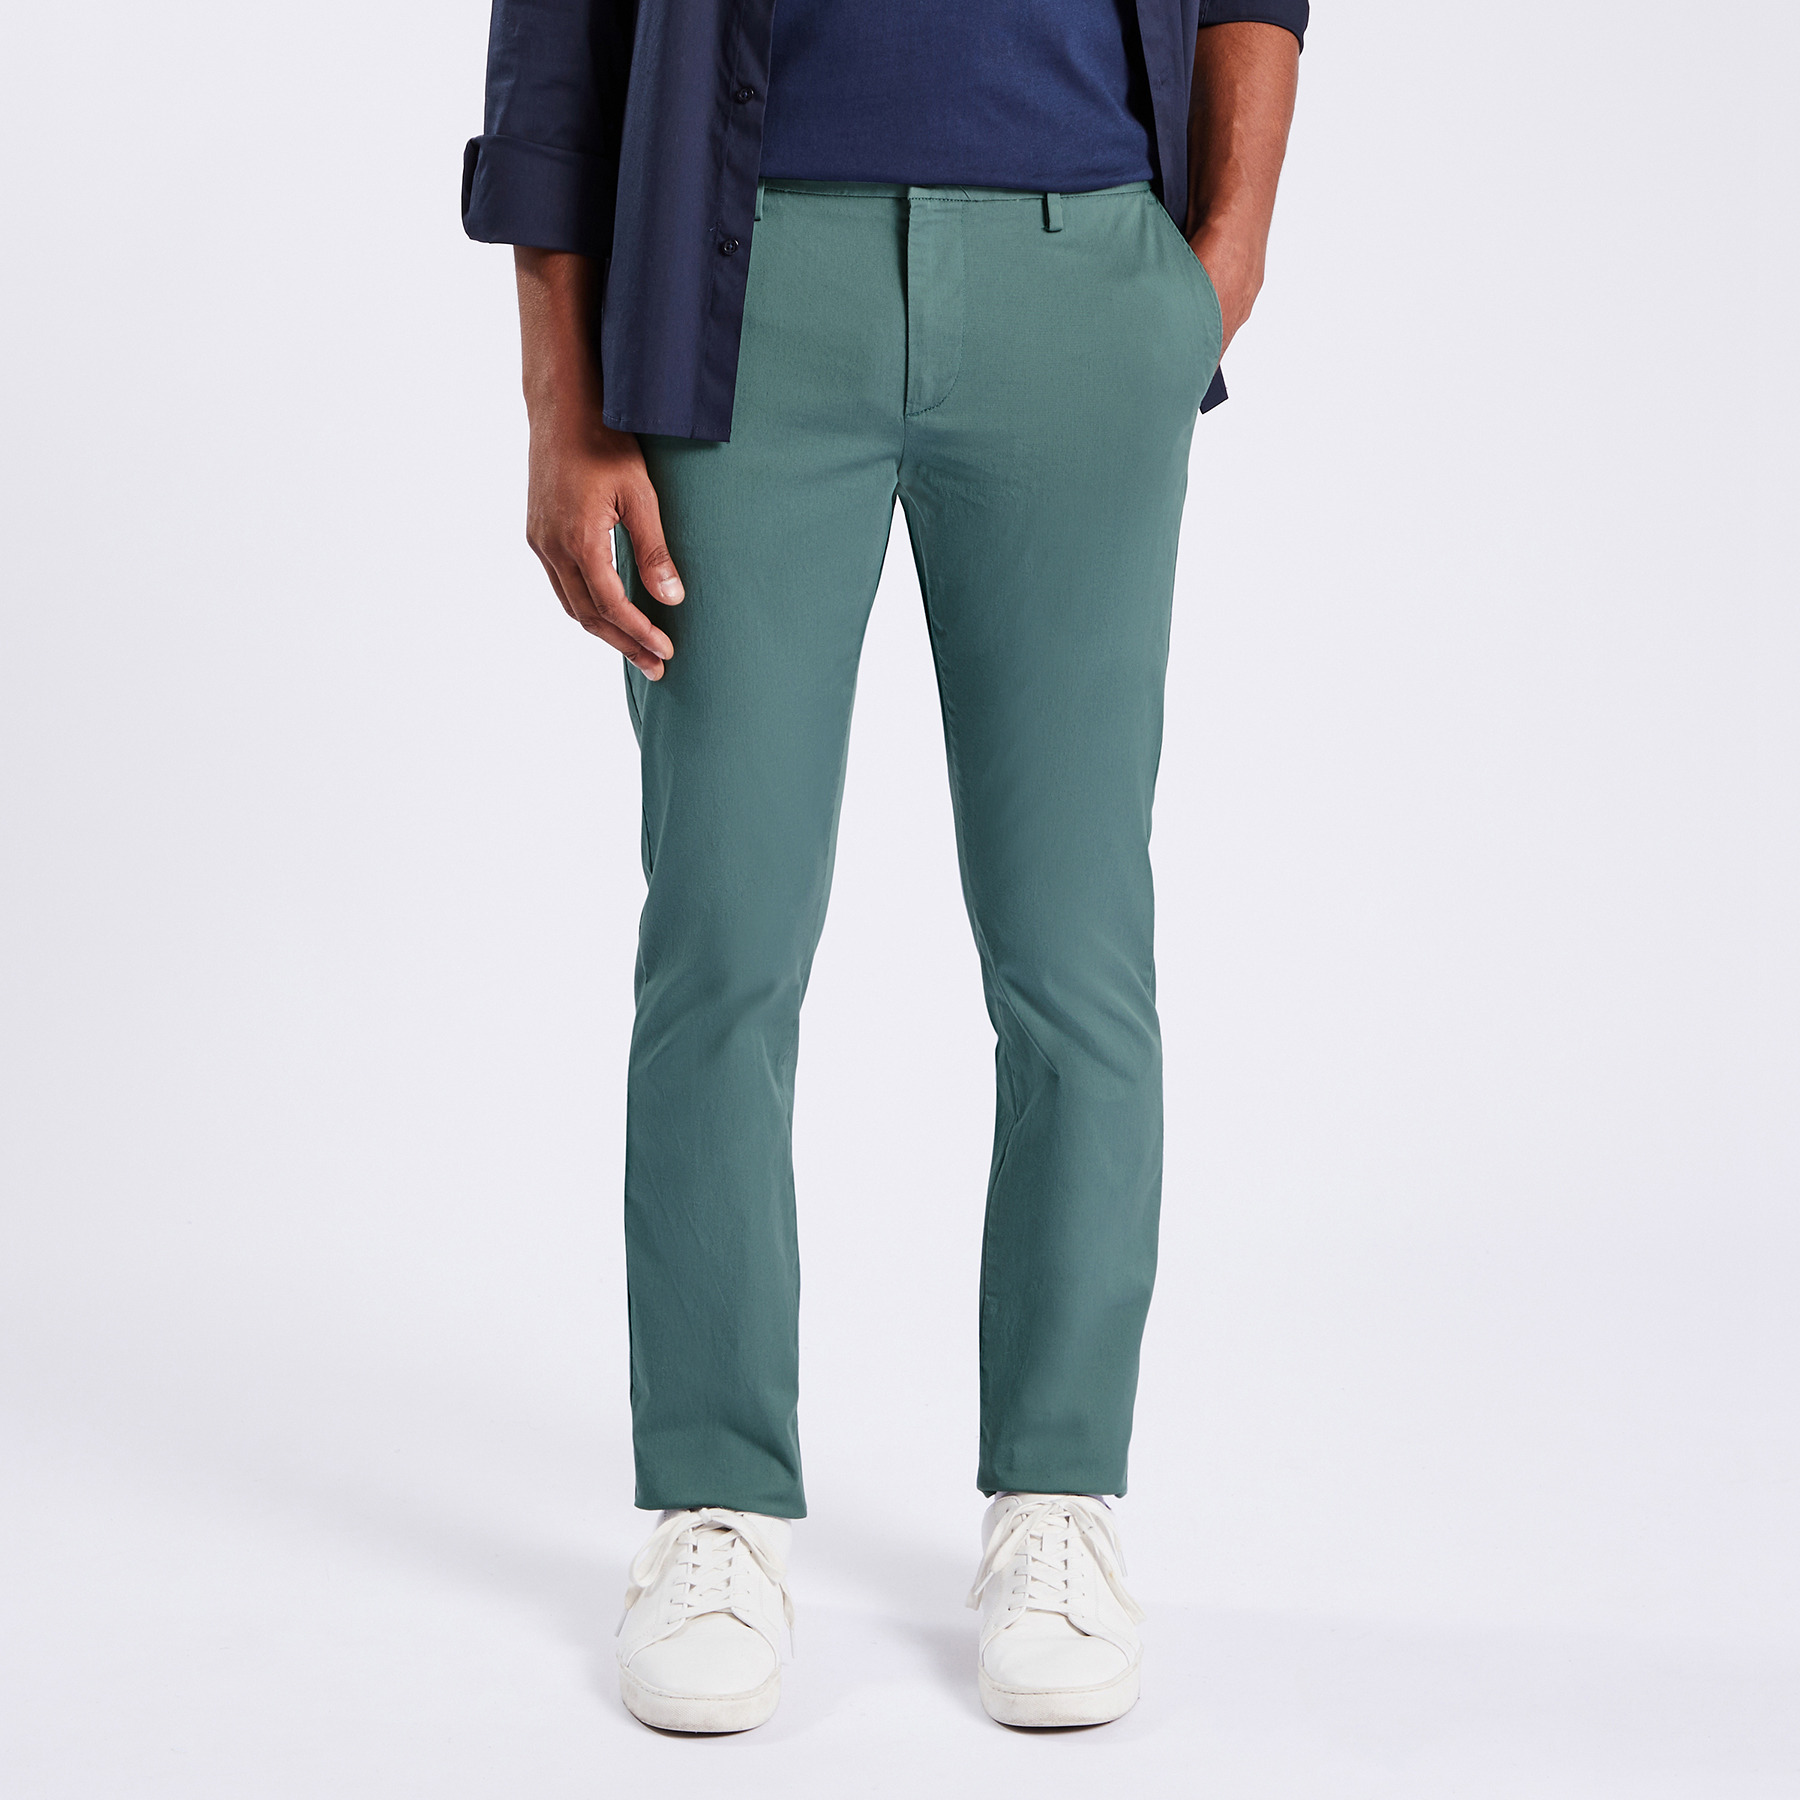 Pantalon chino slim urbain léger Bleu 36 98% Coton, 2% Elasthanne Homme